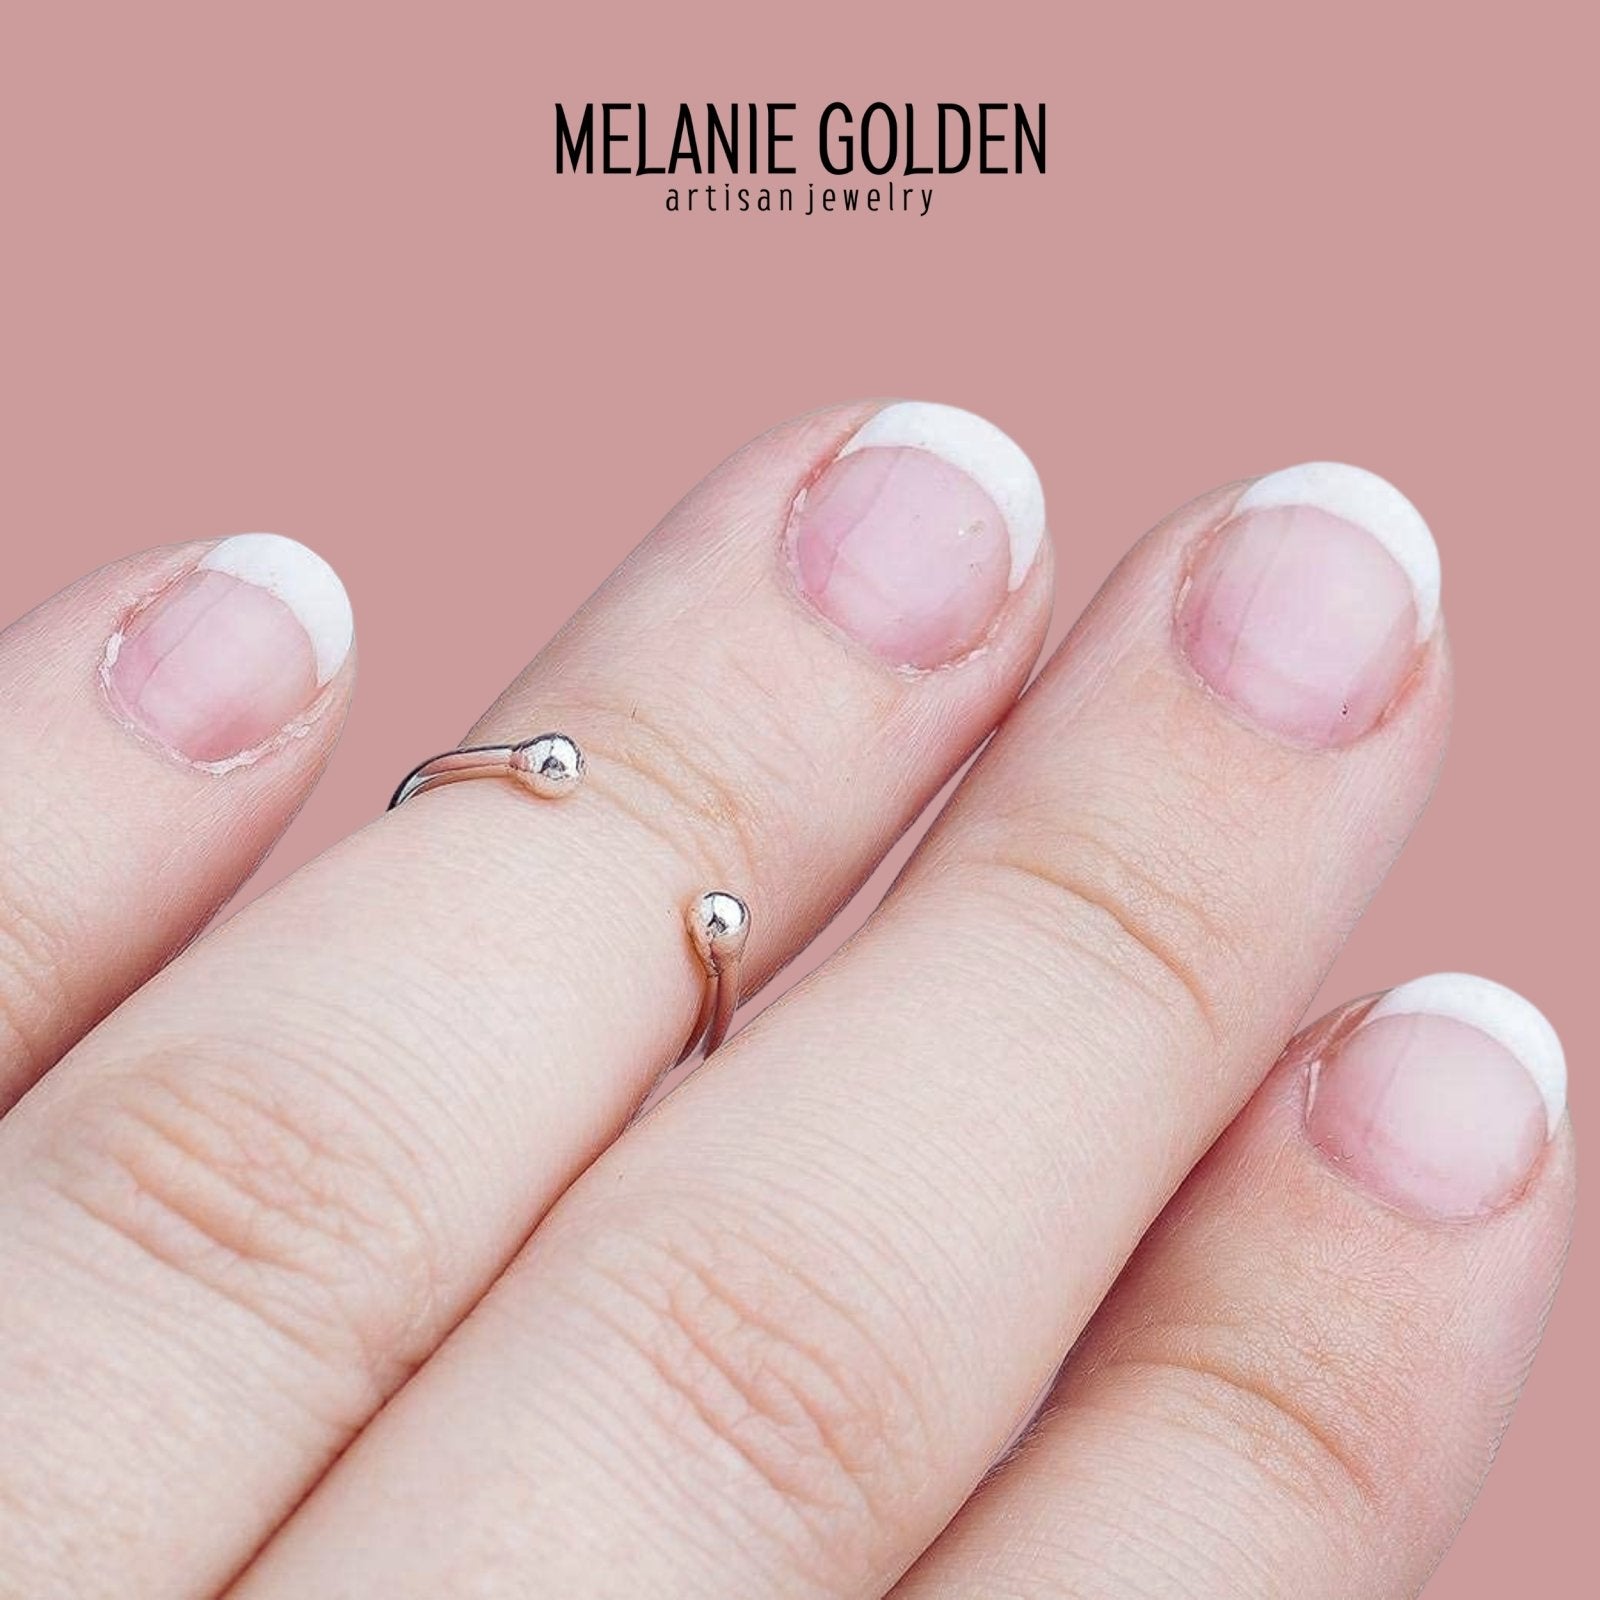 Bull Midi Ring - Melanie Golden Jewelry - midi, midi ring, ring band, ring bands, rings, silver